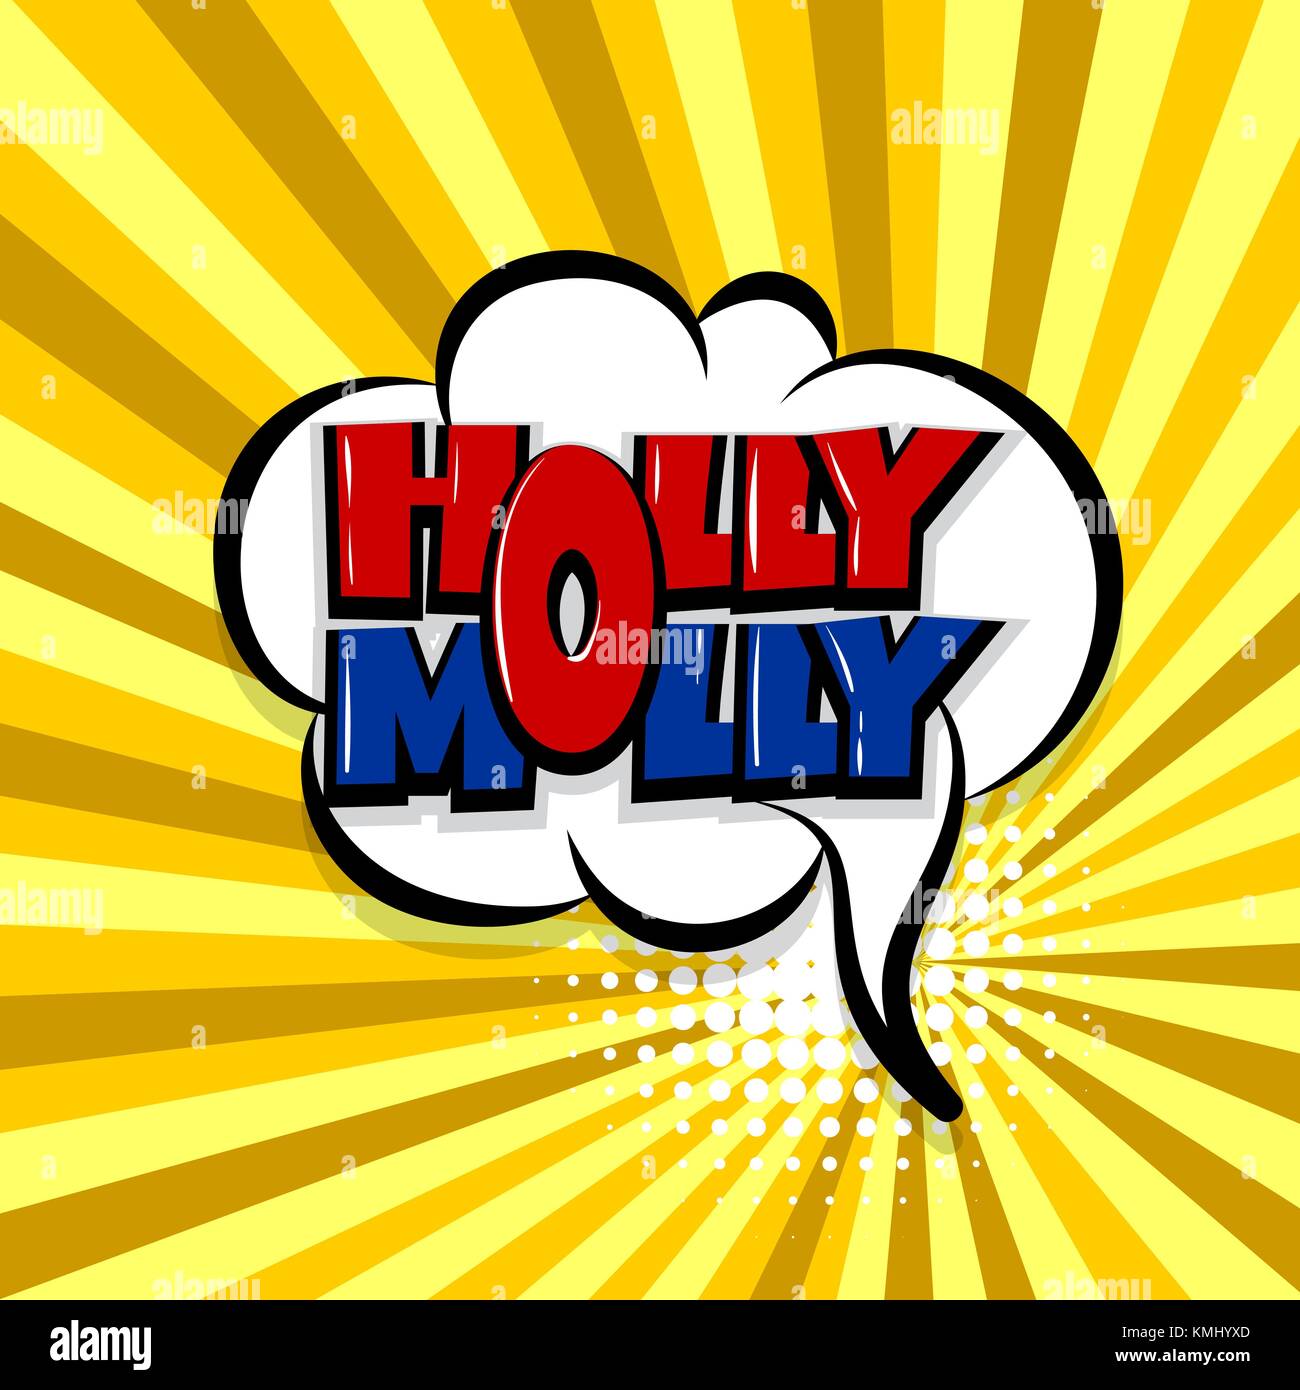 holly molly comic text radial backdrop Stock Vector